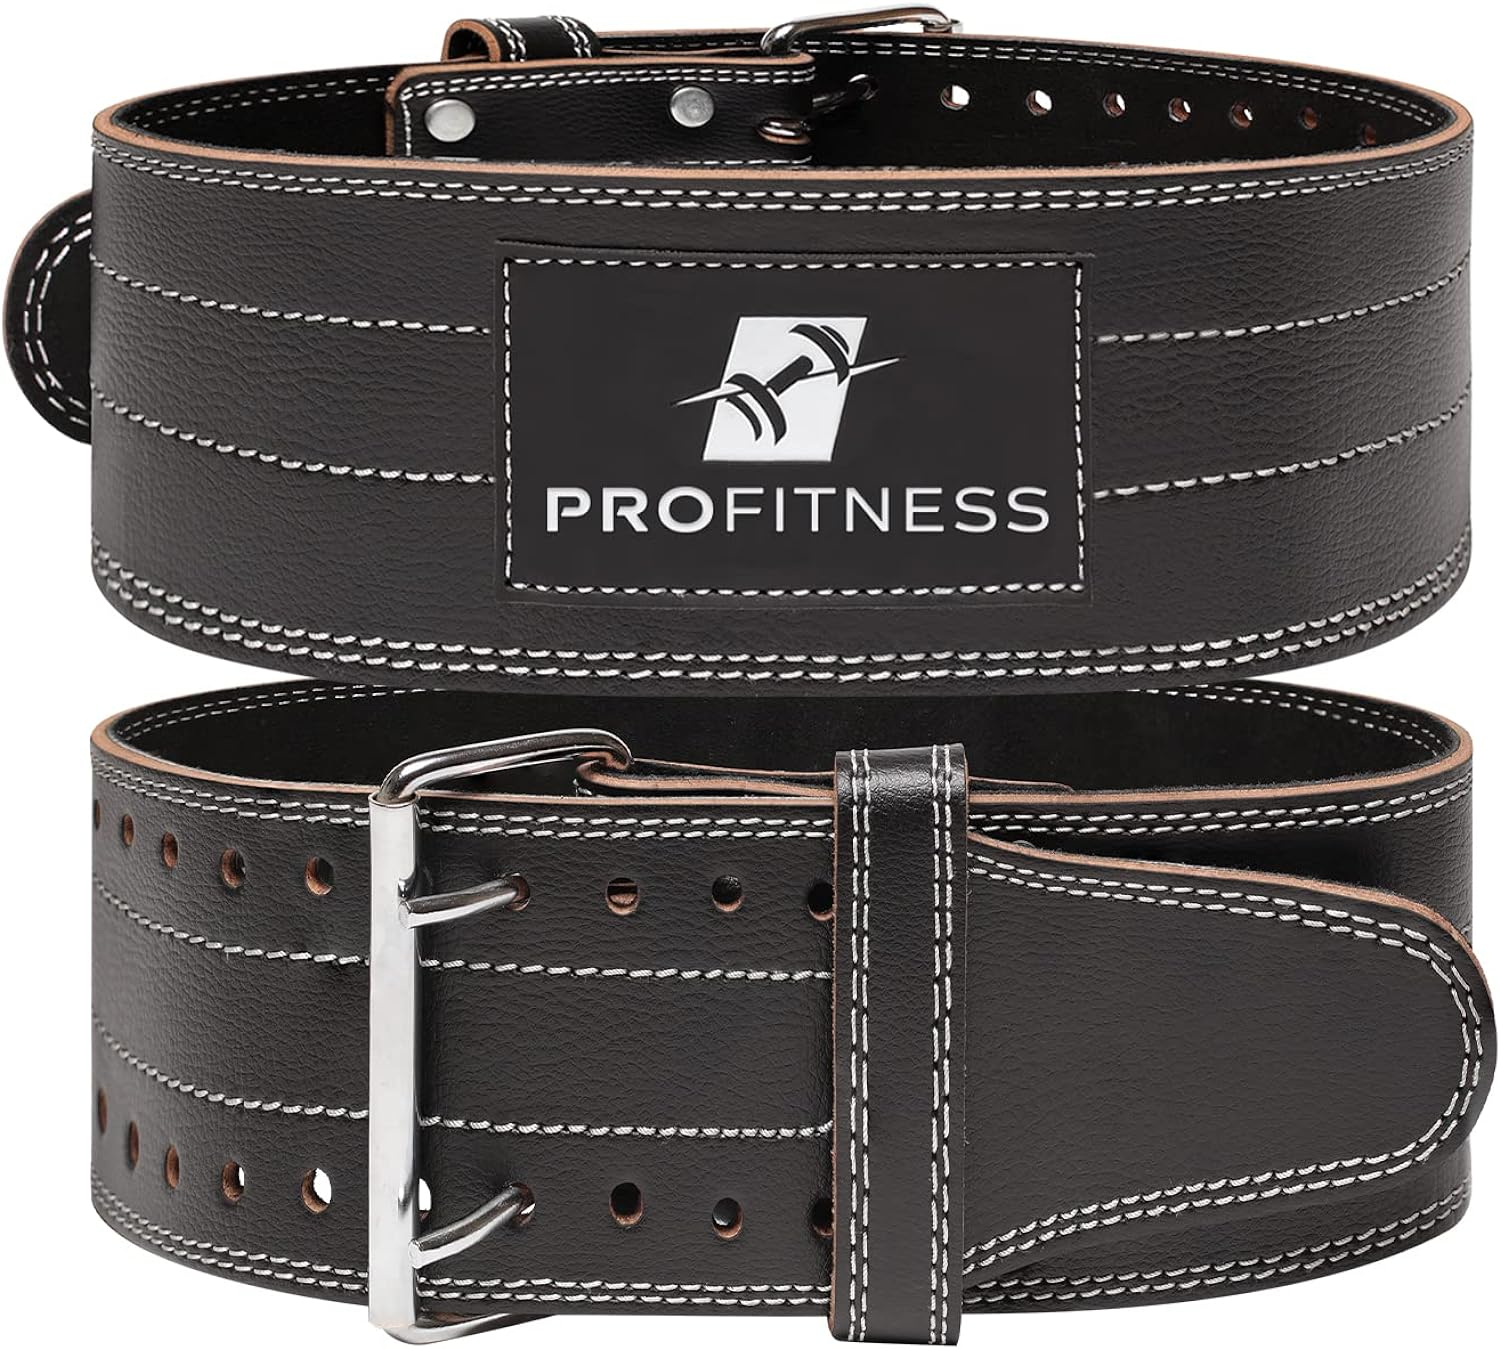 Weight Lifting Belt (5mm Thick) - Leather Weight Lifting Belt for Women  Men - Functional Workout Belt - Gym Belt for Weightlifting, Powerlifting, Squat  Deadlift - Adjustable Weightlifting Belt